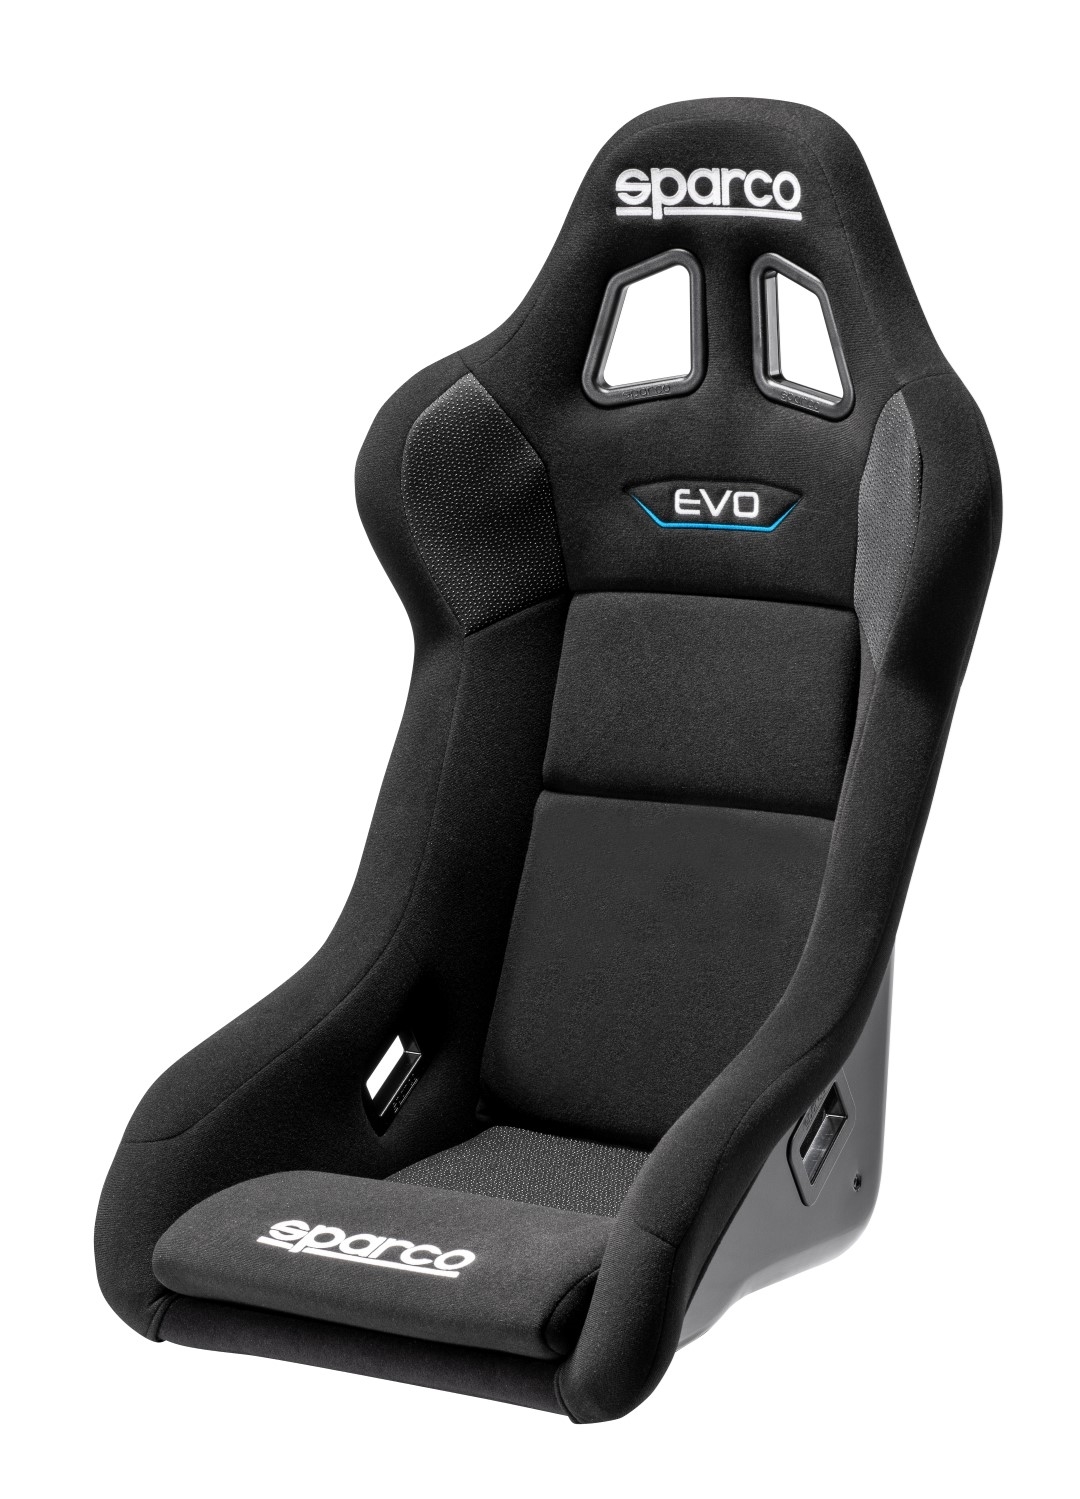 Spacro EVO QRT Black Cloth Competition Racing Seat, Corvette, Camaro, Mustang Fitment